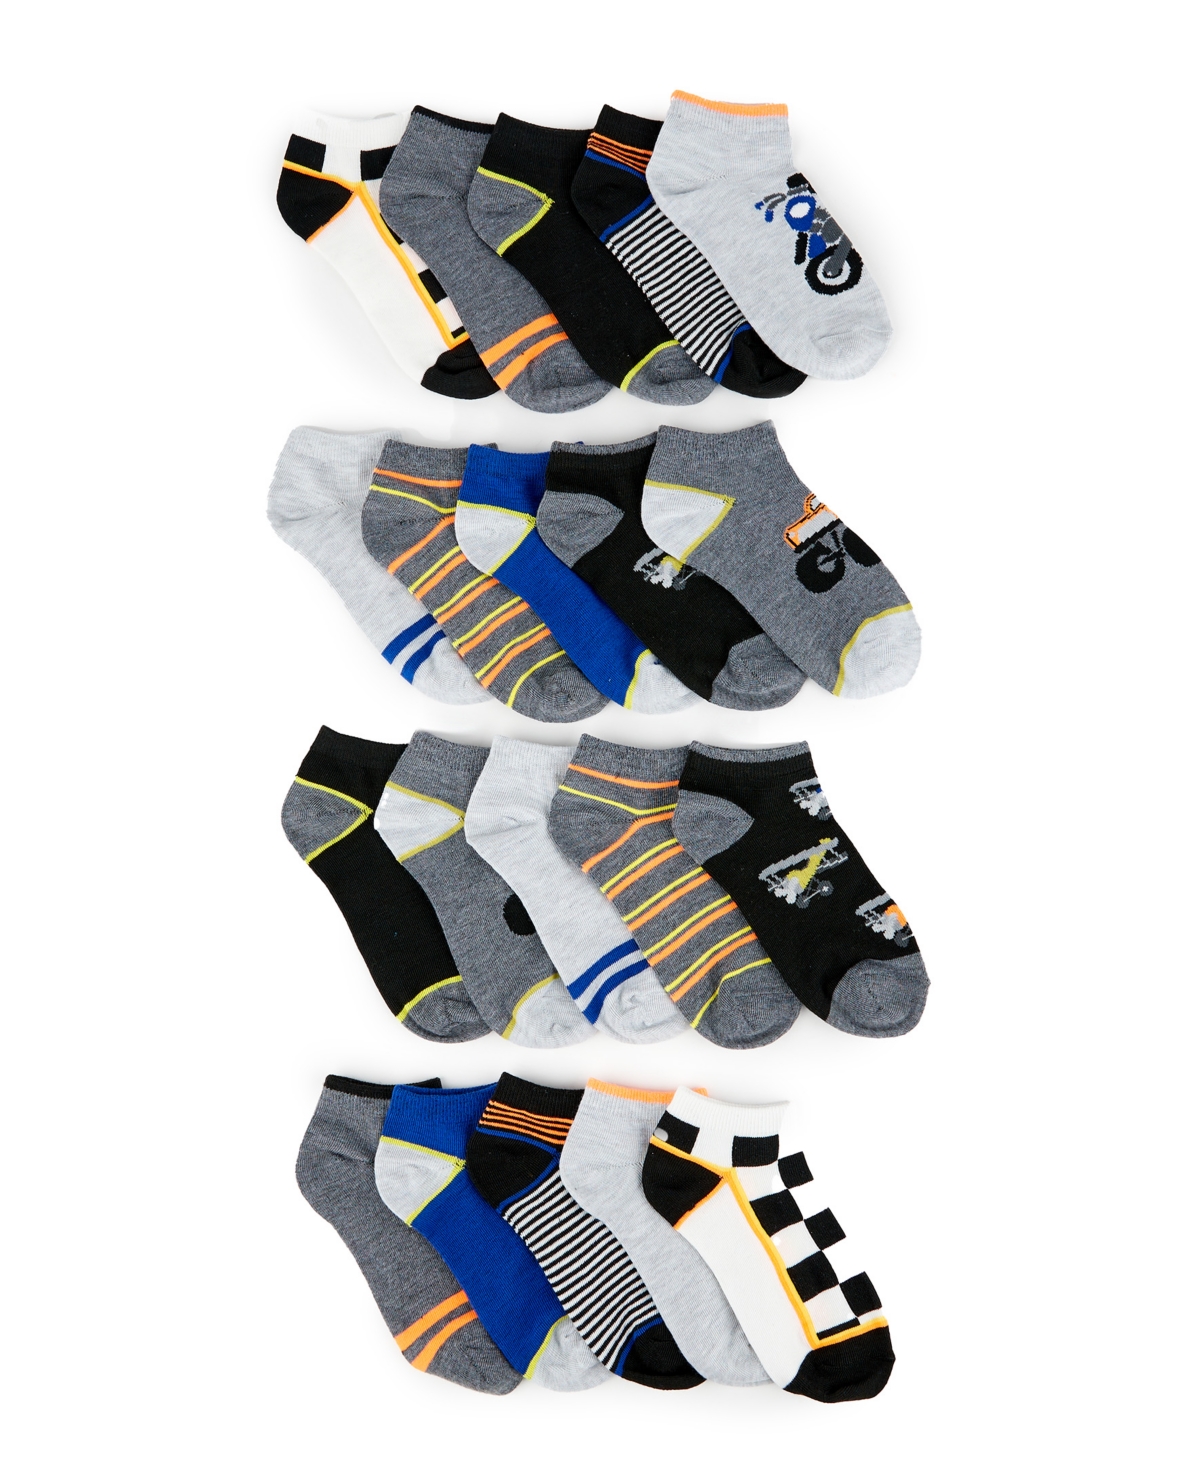 Trimfit Big Boys Racer Novelty Flat Knit Low Cut Socks, Pack of 20